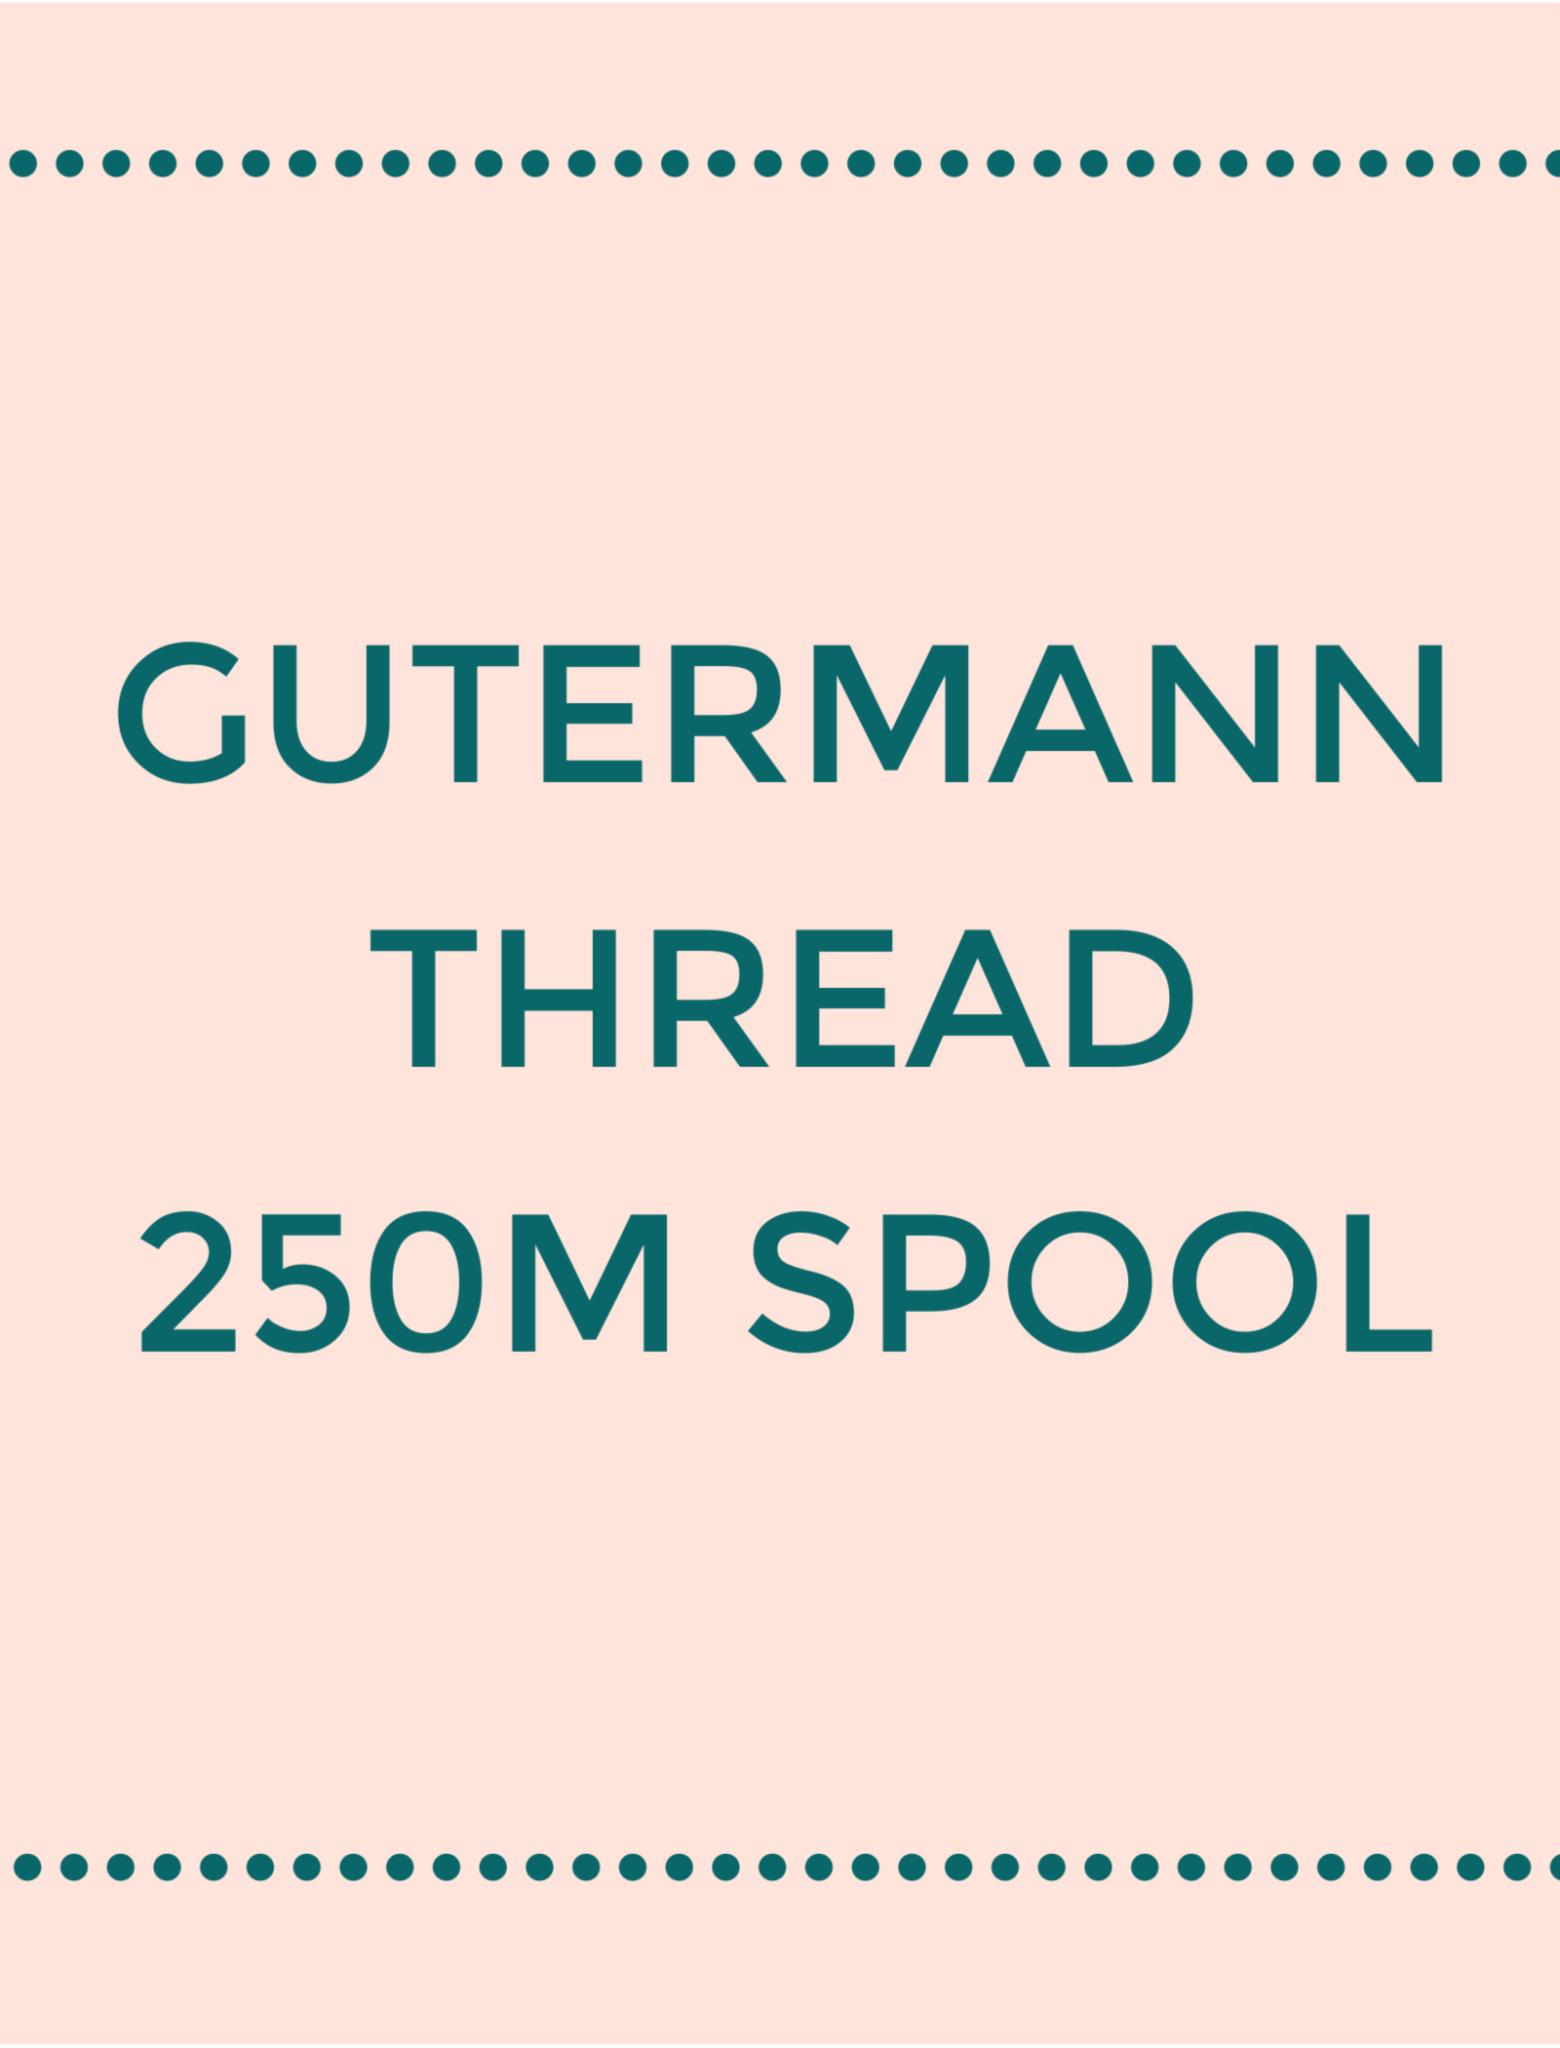 795 Antique White 250m Gutermann Sew All Thread - Sew All 250m